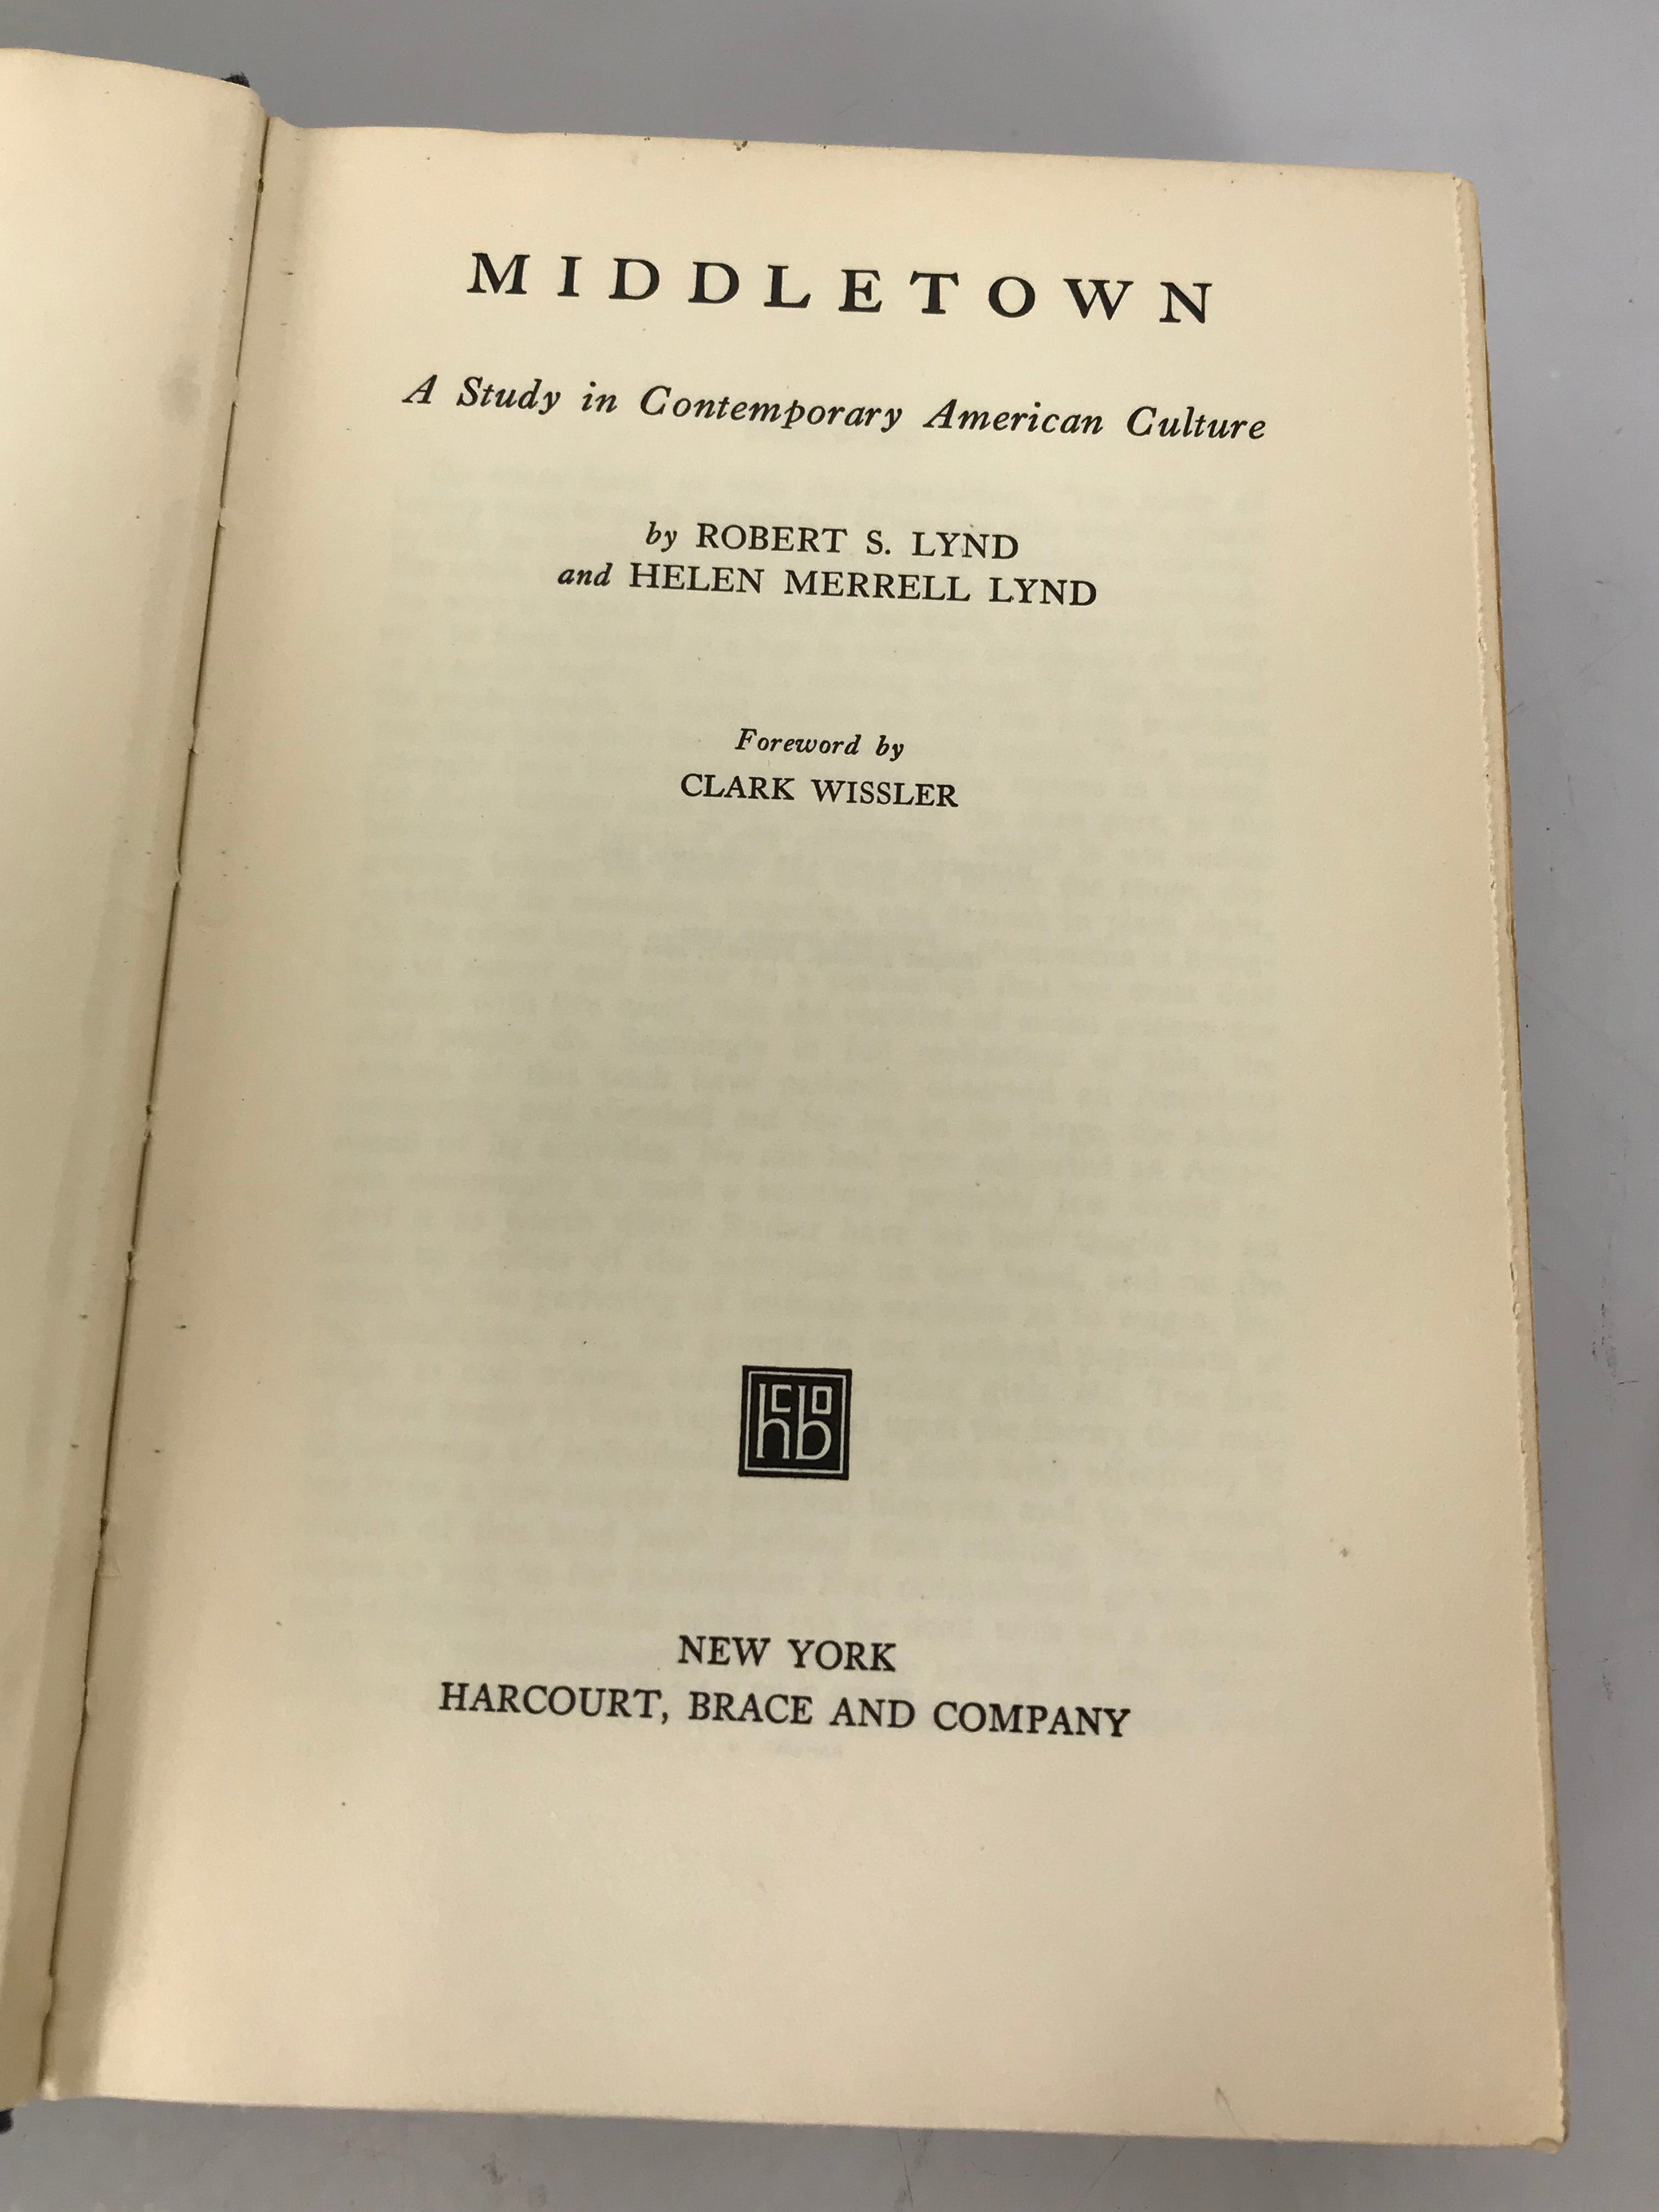 Middletown by Robert S. Lynd and Helen Merrell Lynd 1929 HC